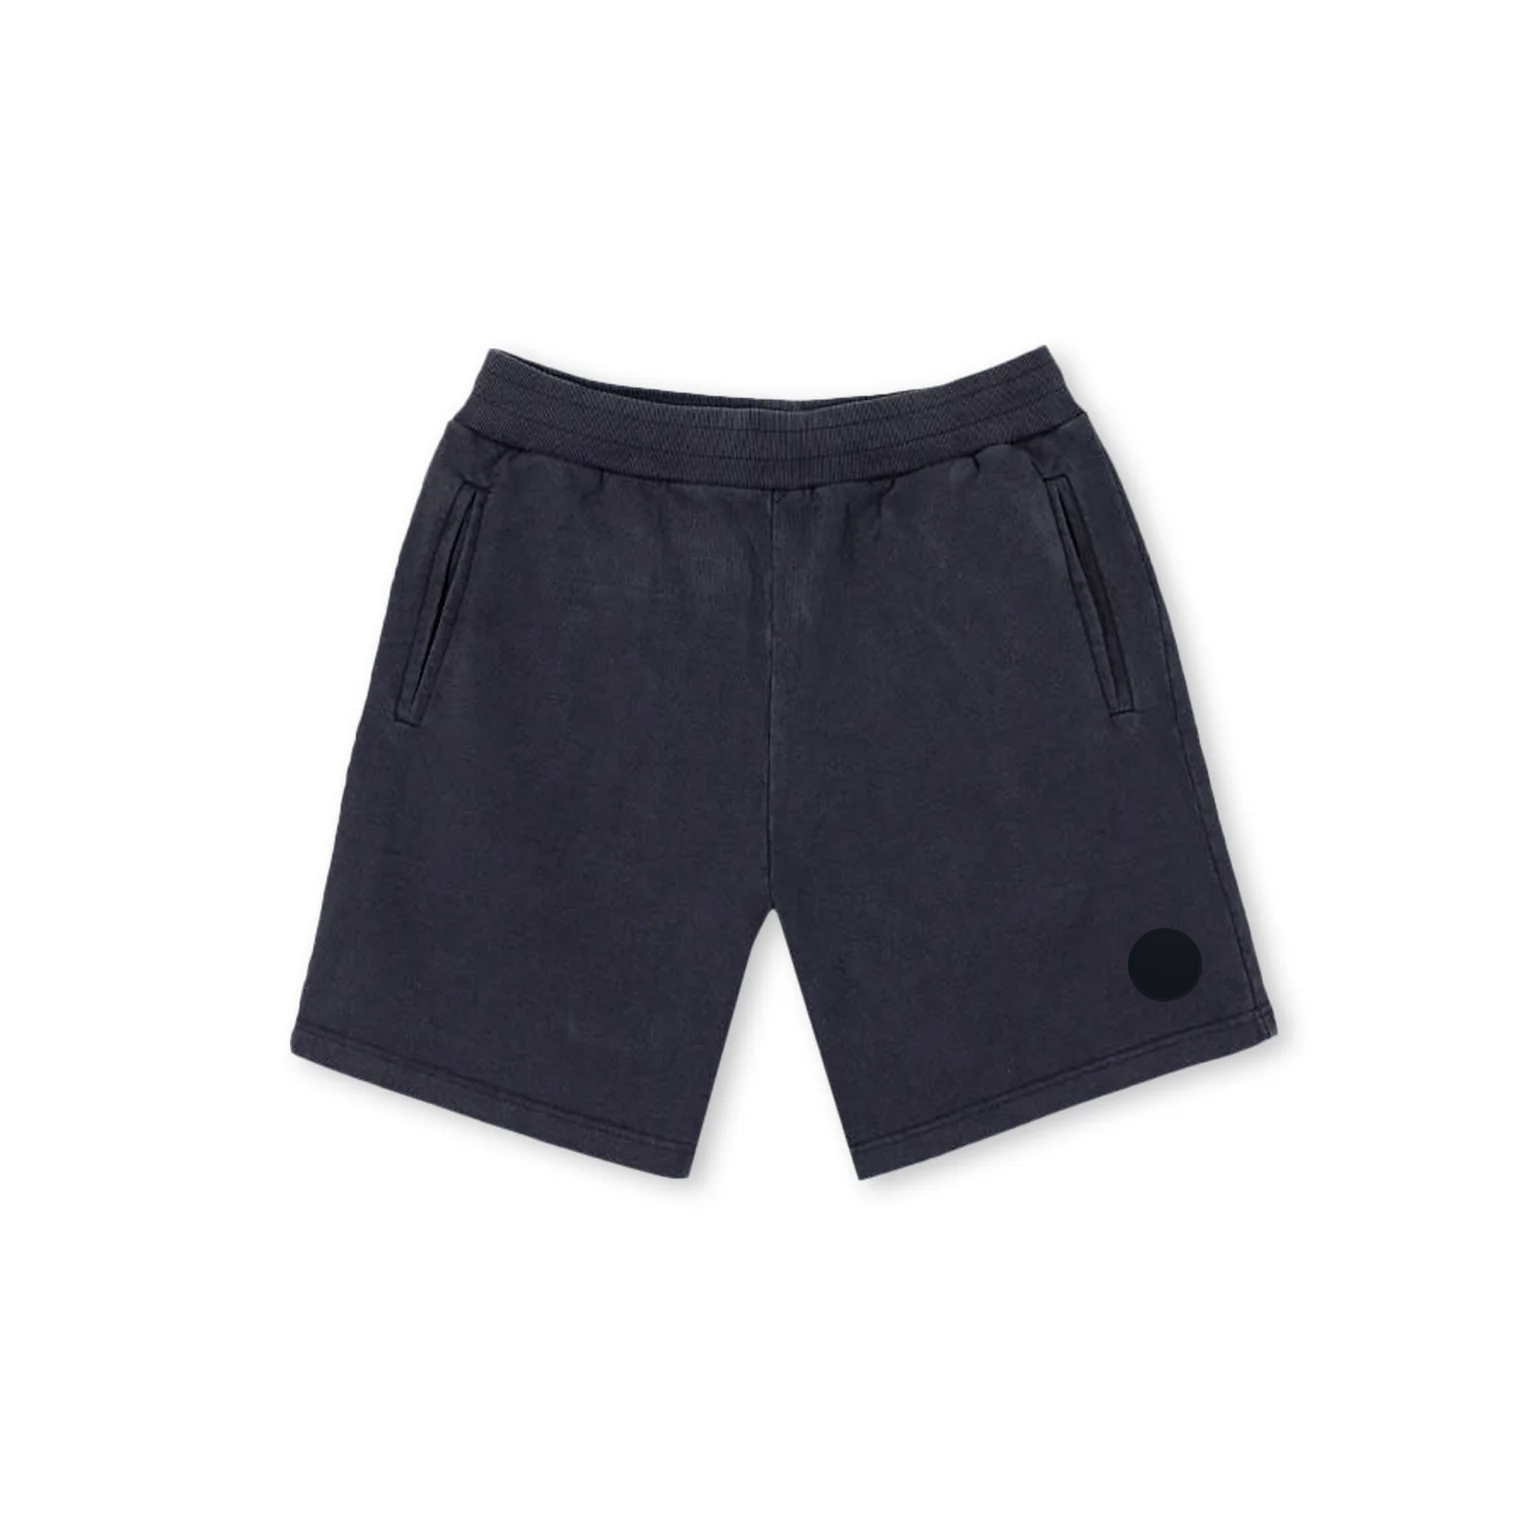 Vintage Black Summer Shorts (Coming Soon)